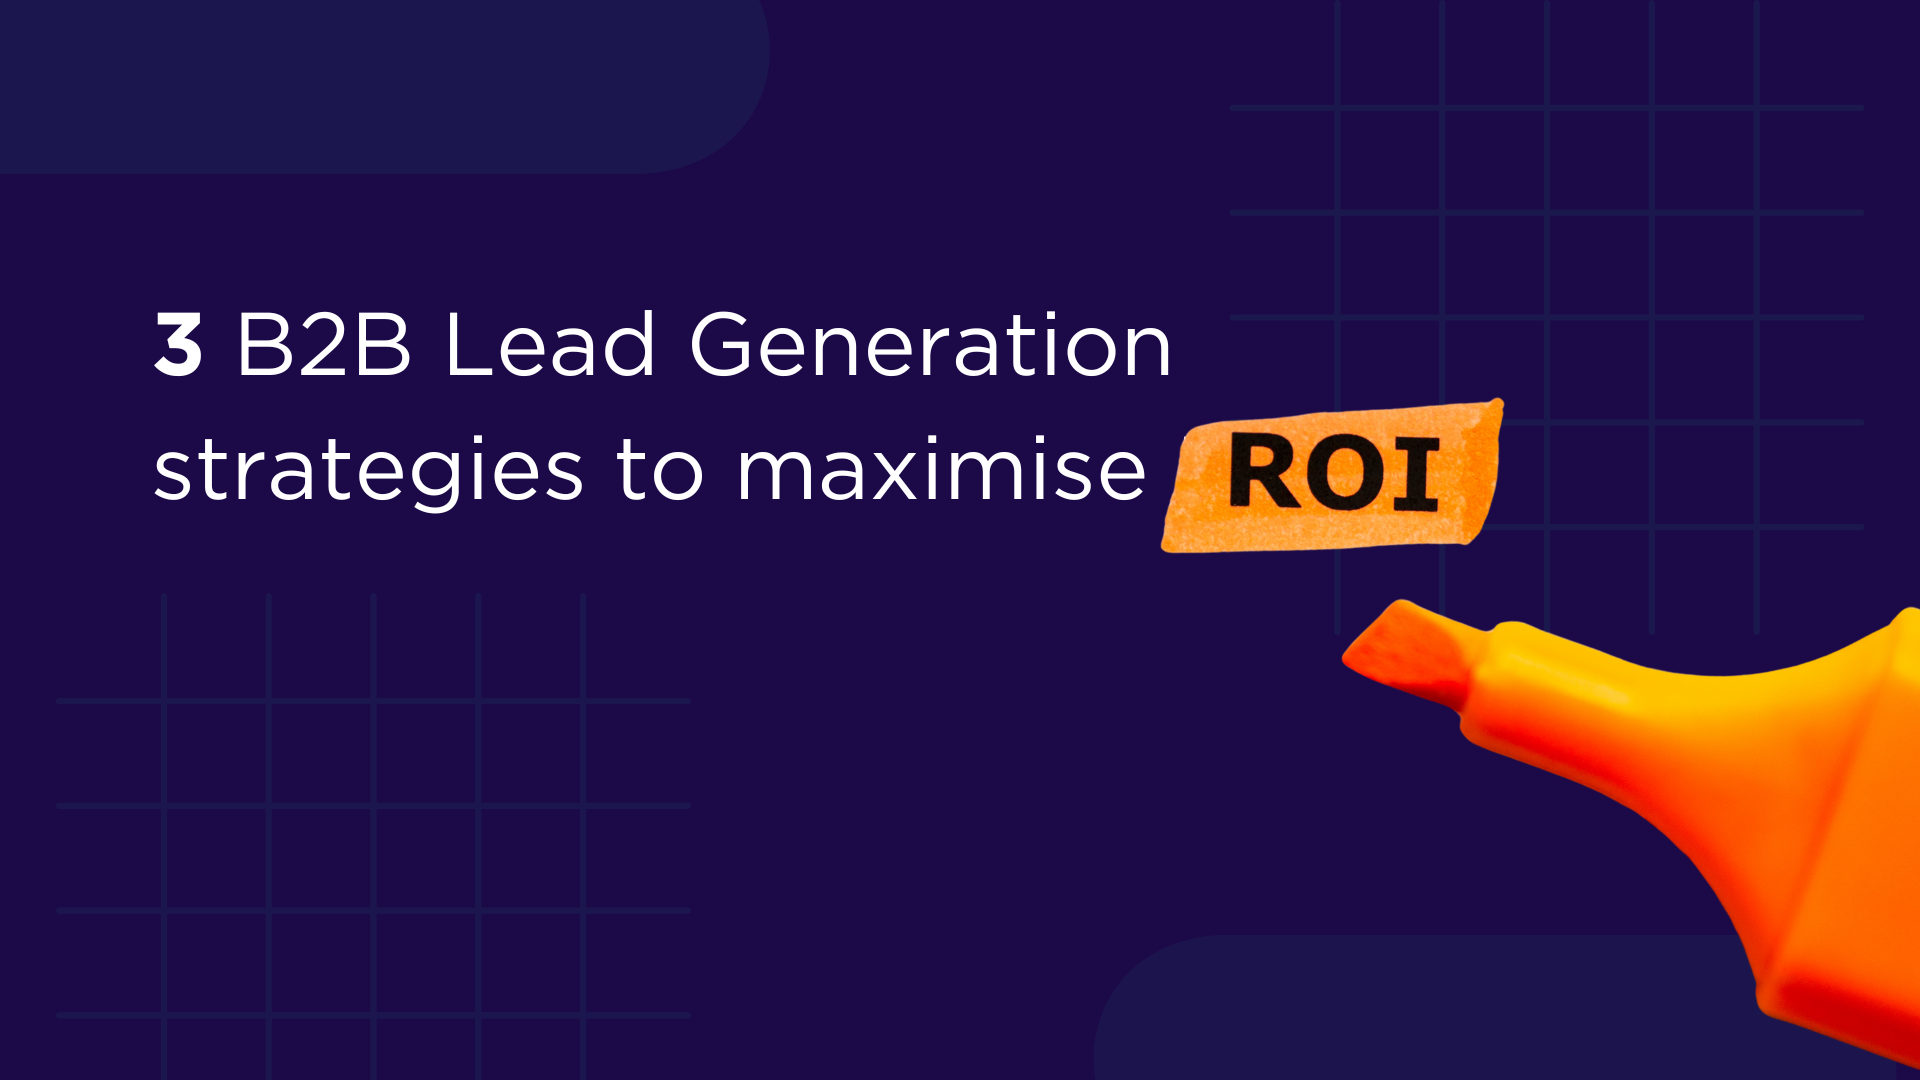 3 B2B Lead Generation strategies to maximise ROI